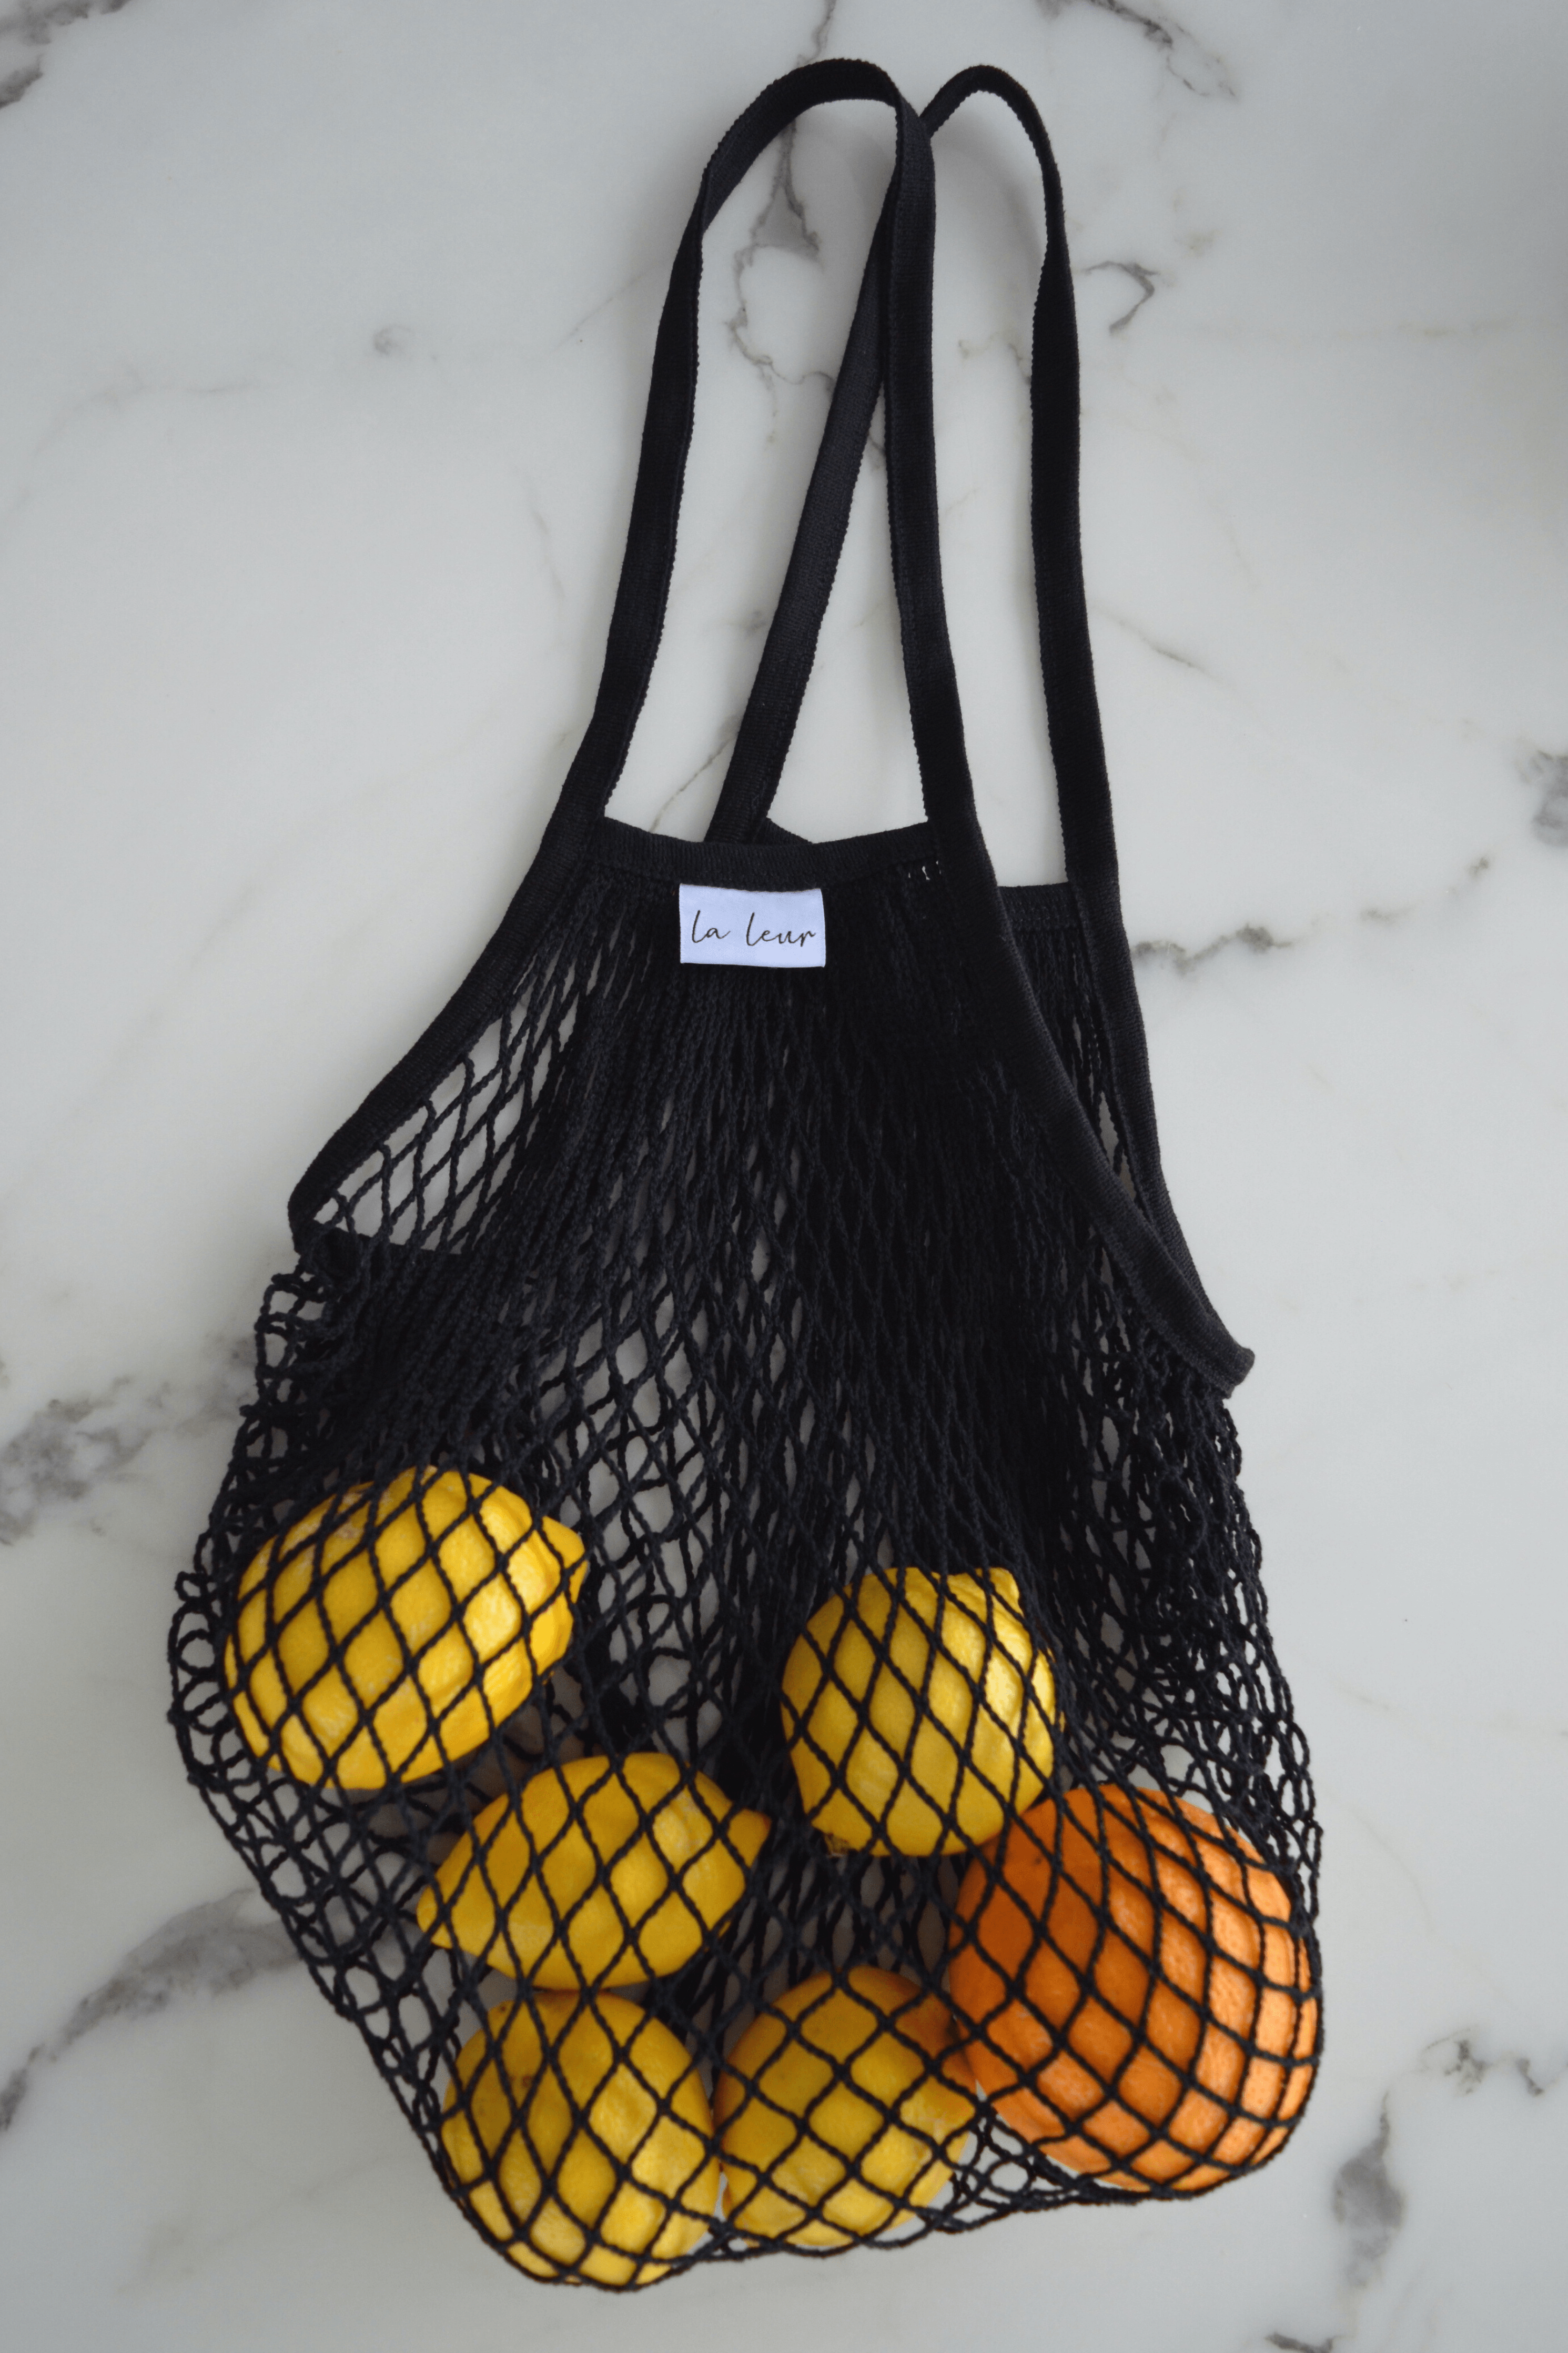 Net shopping bag